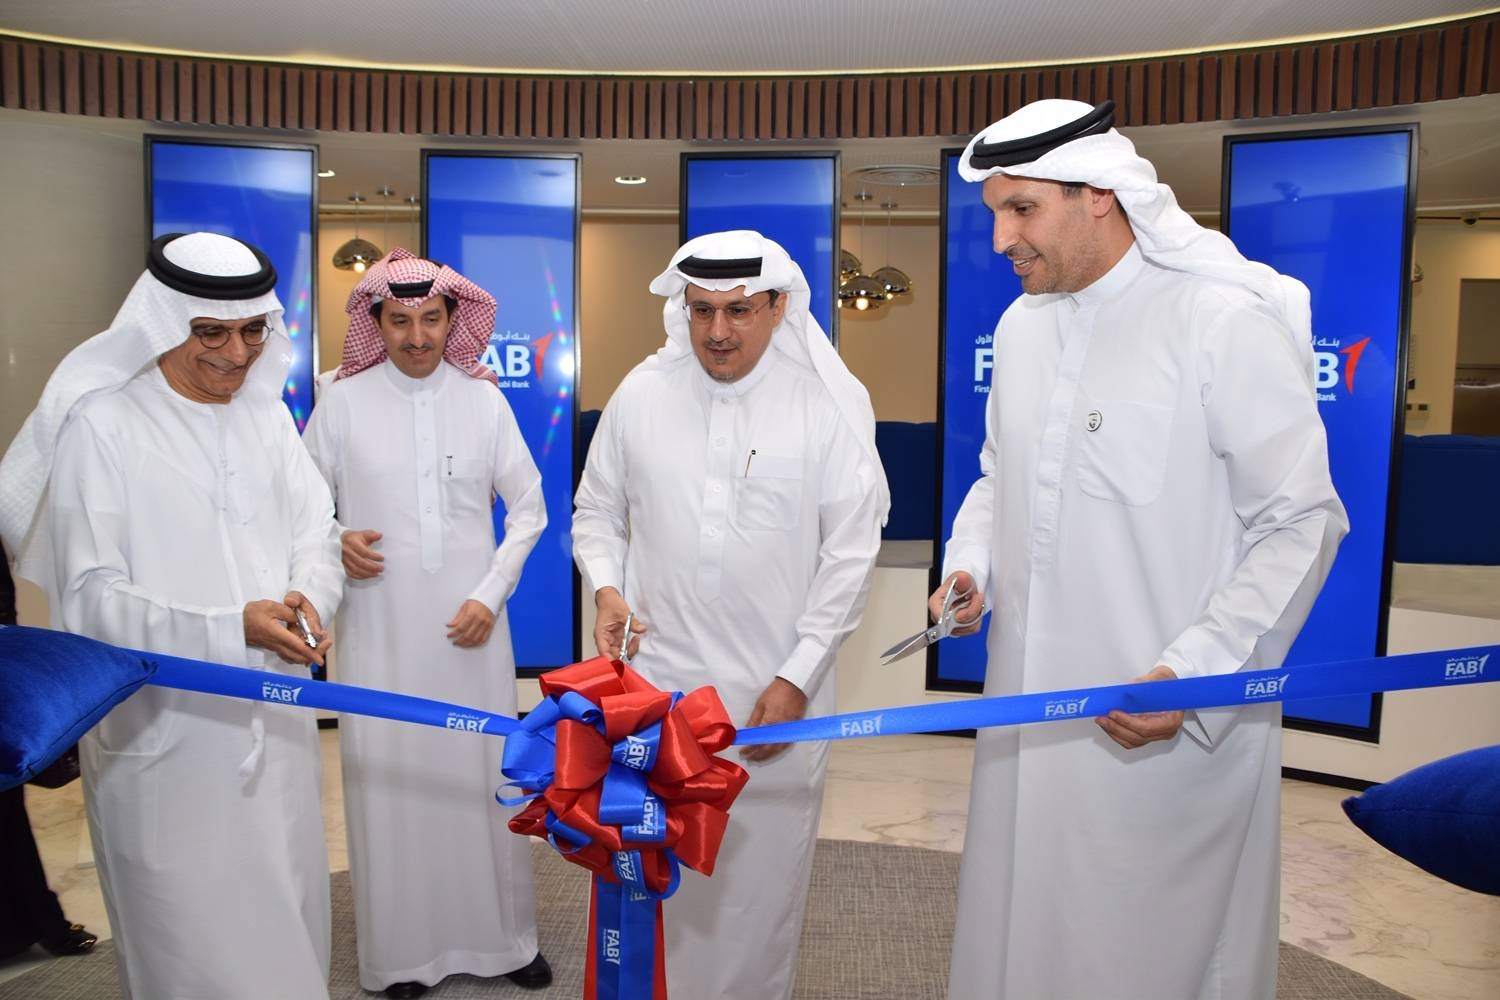 The first FAB branch being inaugurated in Riyadh, Saudi Arabia. — Courtesy photos